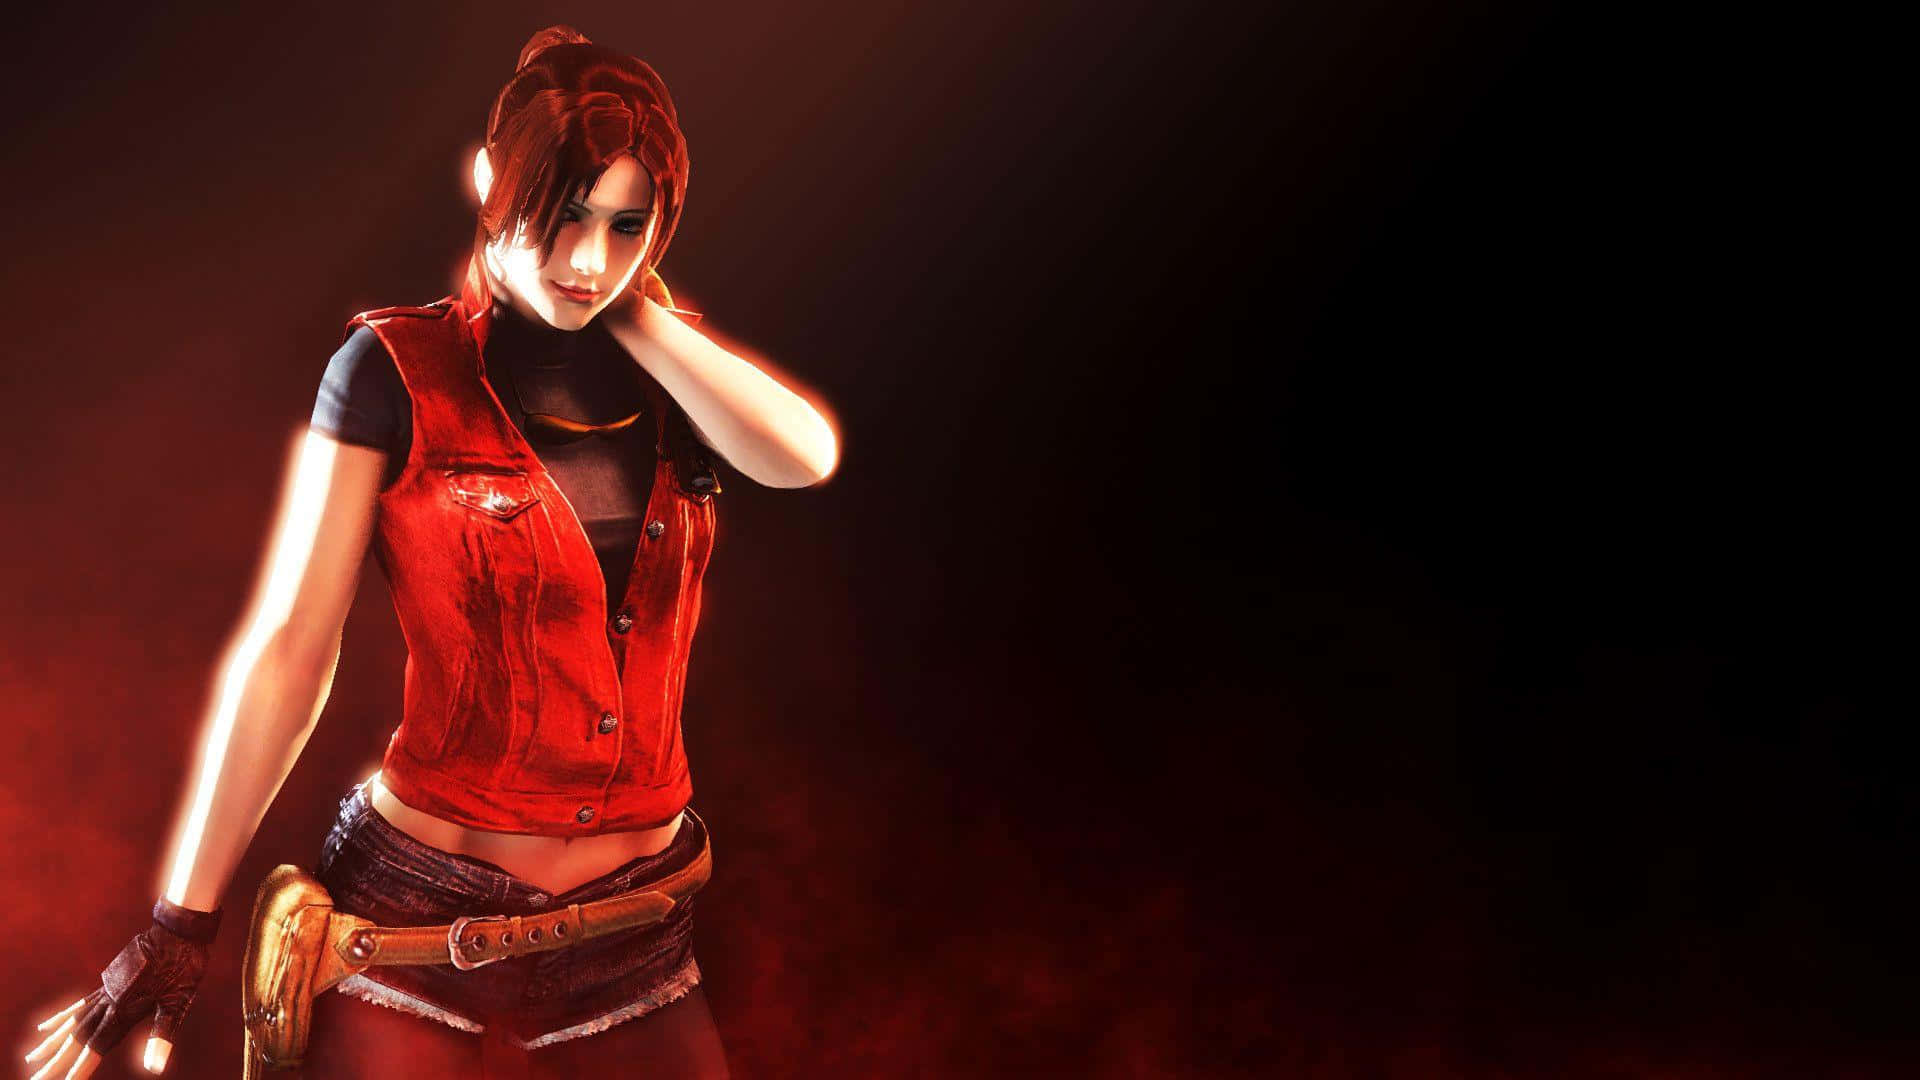 Claire Redfield making her return in Resident Evil 2 Wallpaper